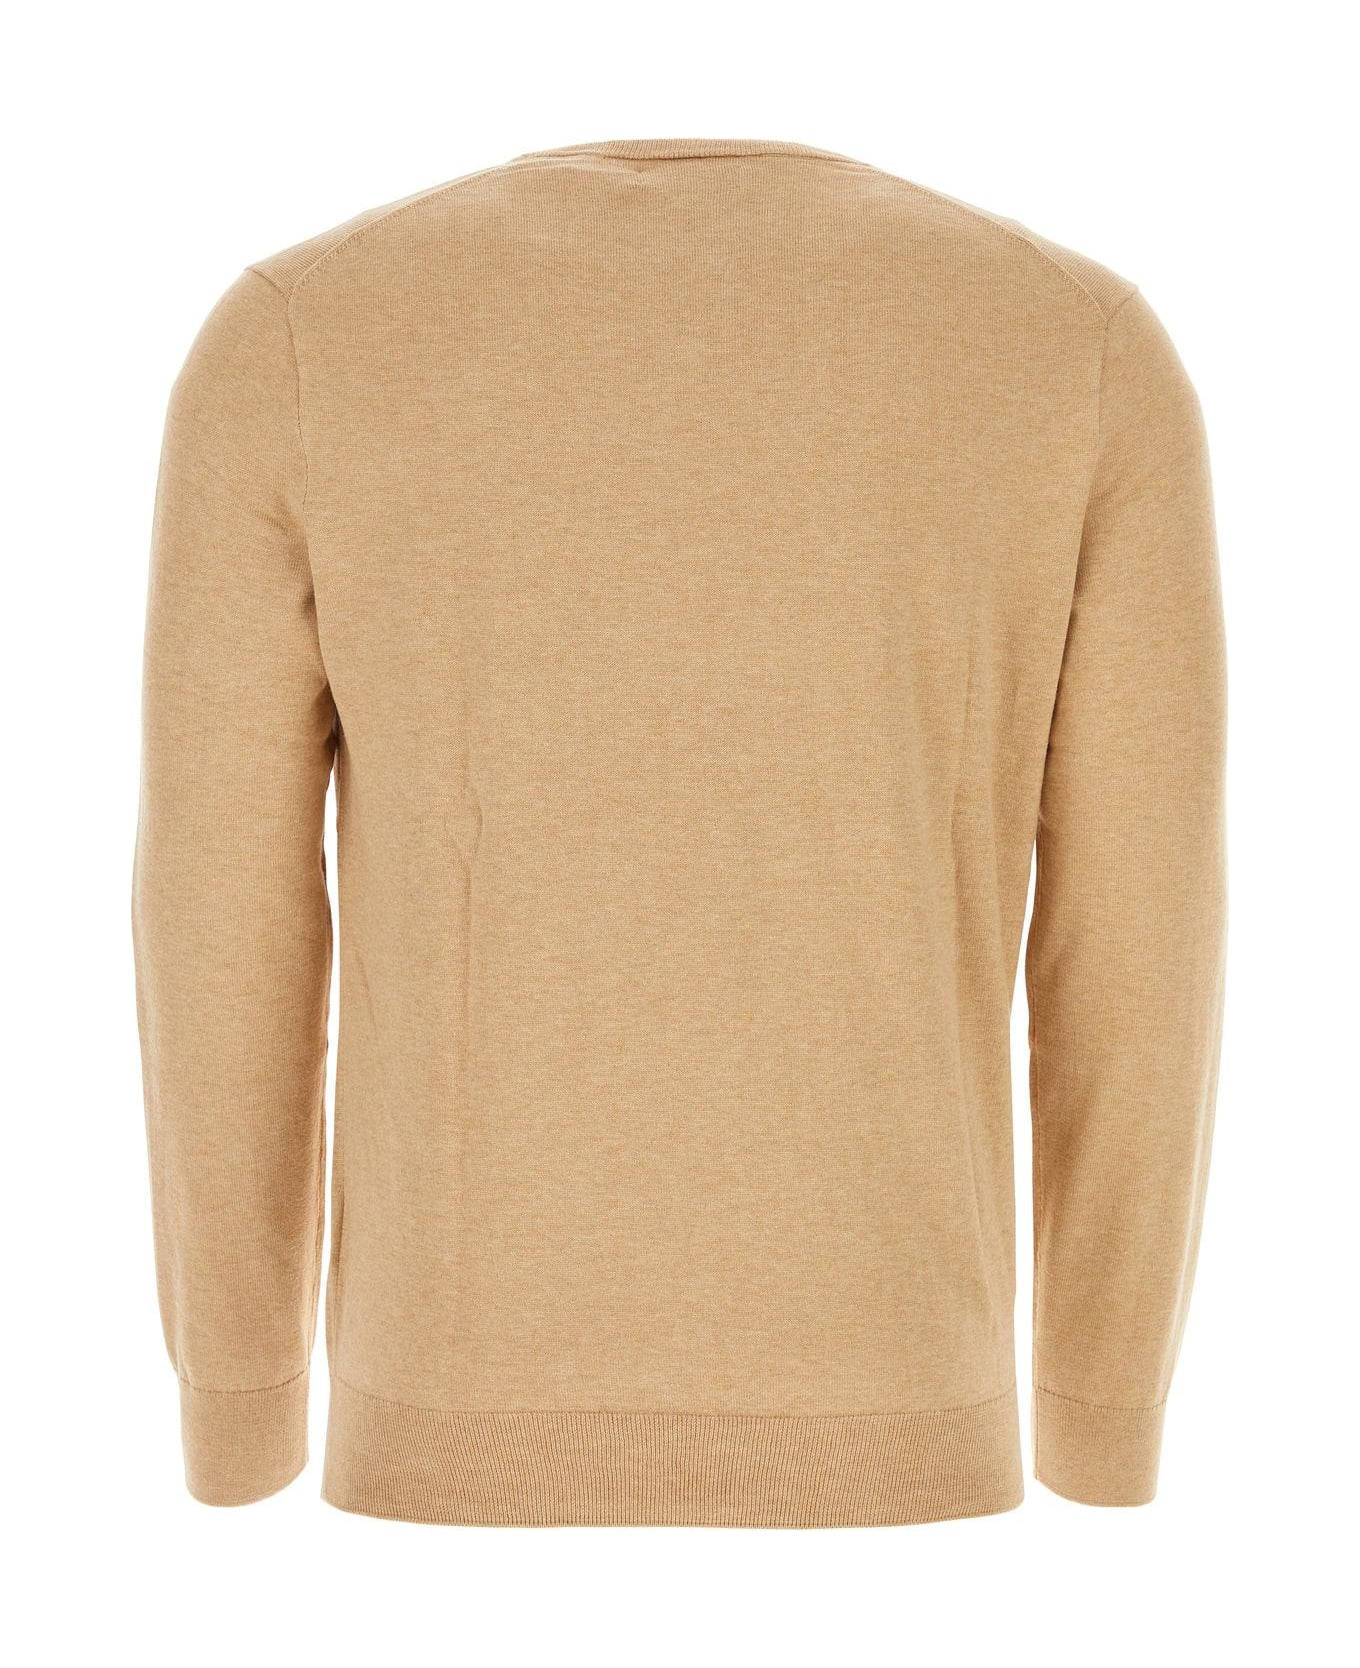 Polo Ralph Lauren Camel Cotton Sweater - Beige